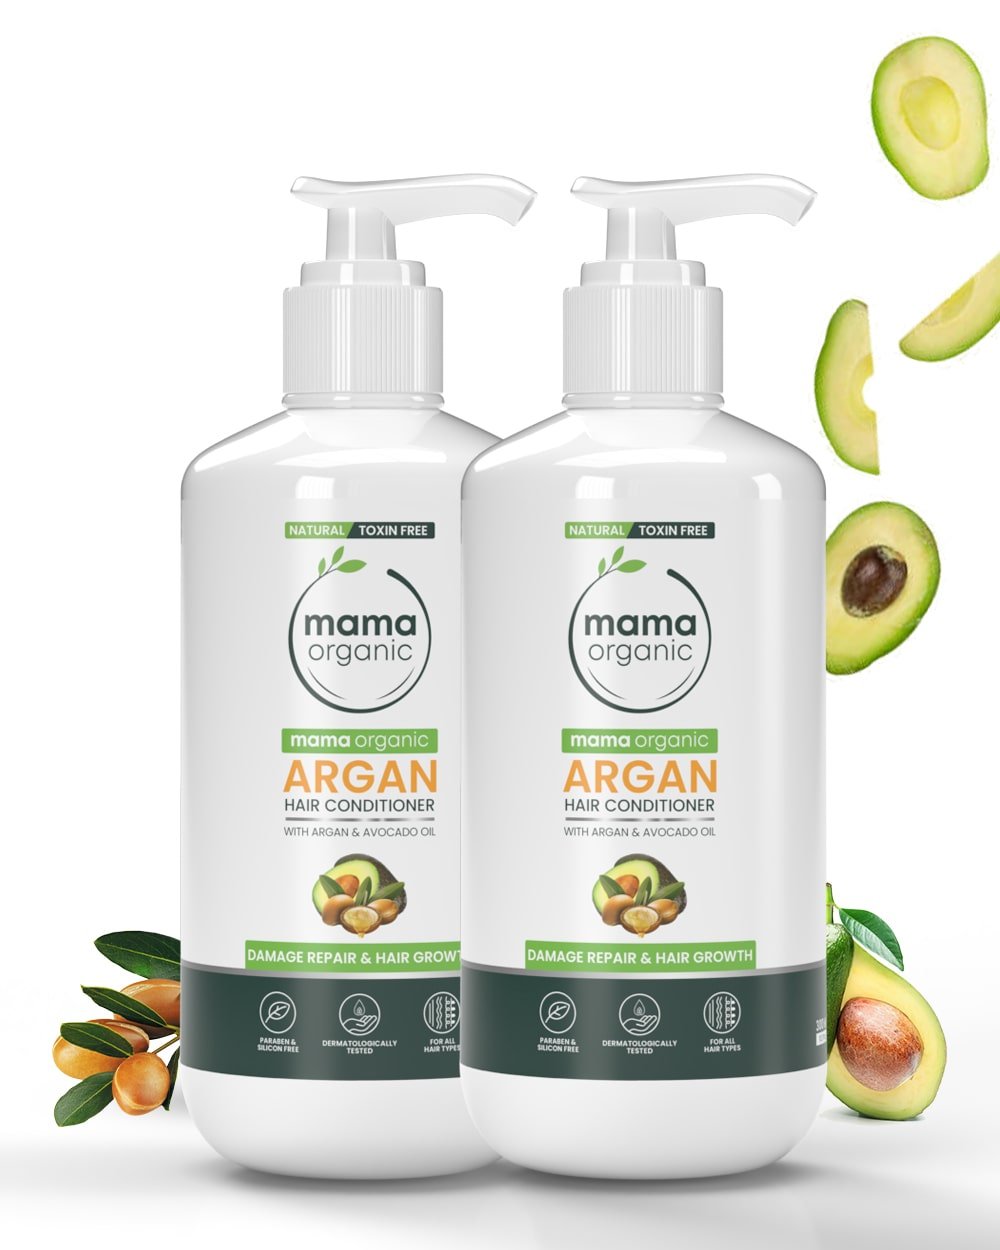 Argan Hair Conditioner 300ml Combo For Damage Repair & Hair Growth - Natural & Toxin-Free - MamaOrganic